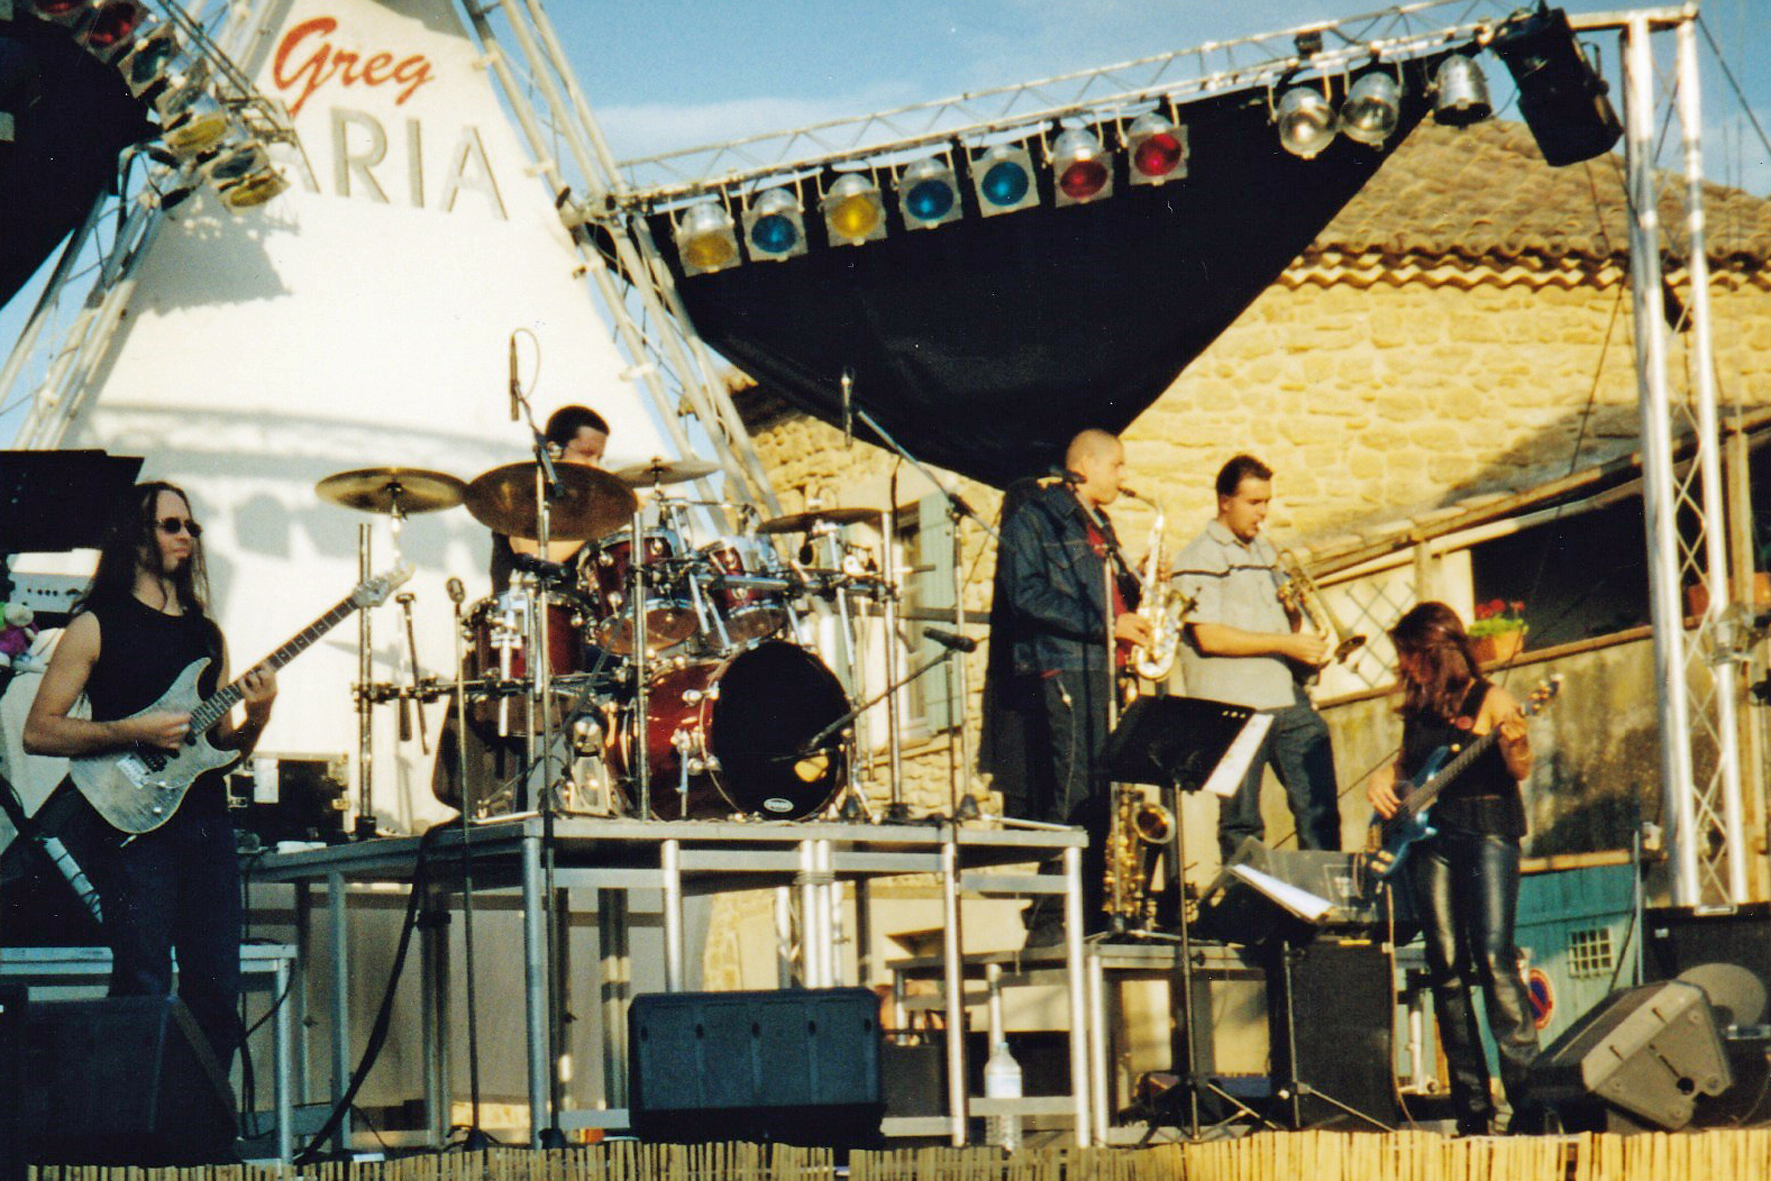 Band Greg Aria on Bastille Day